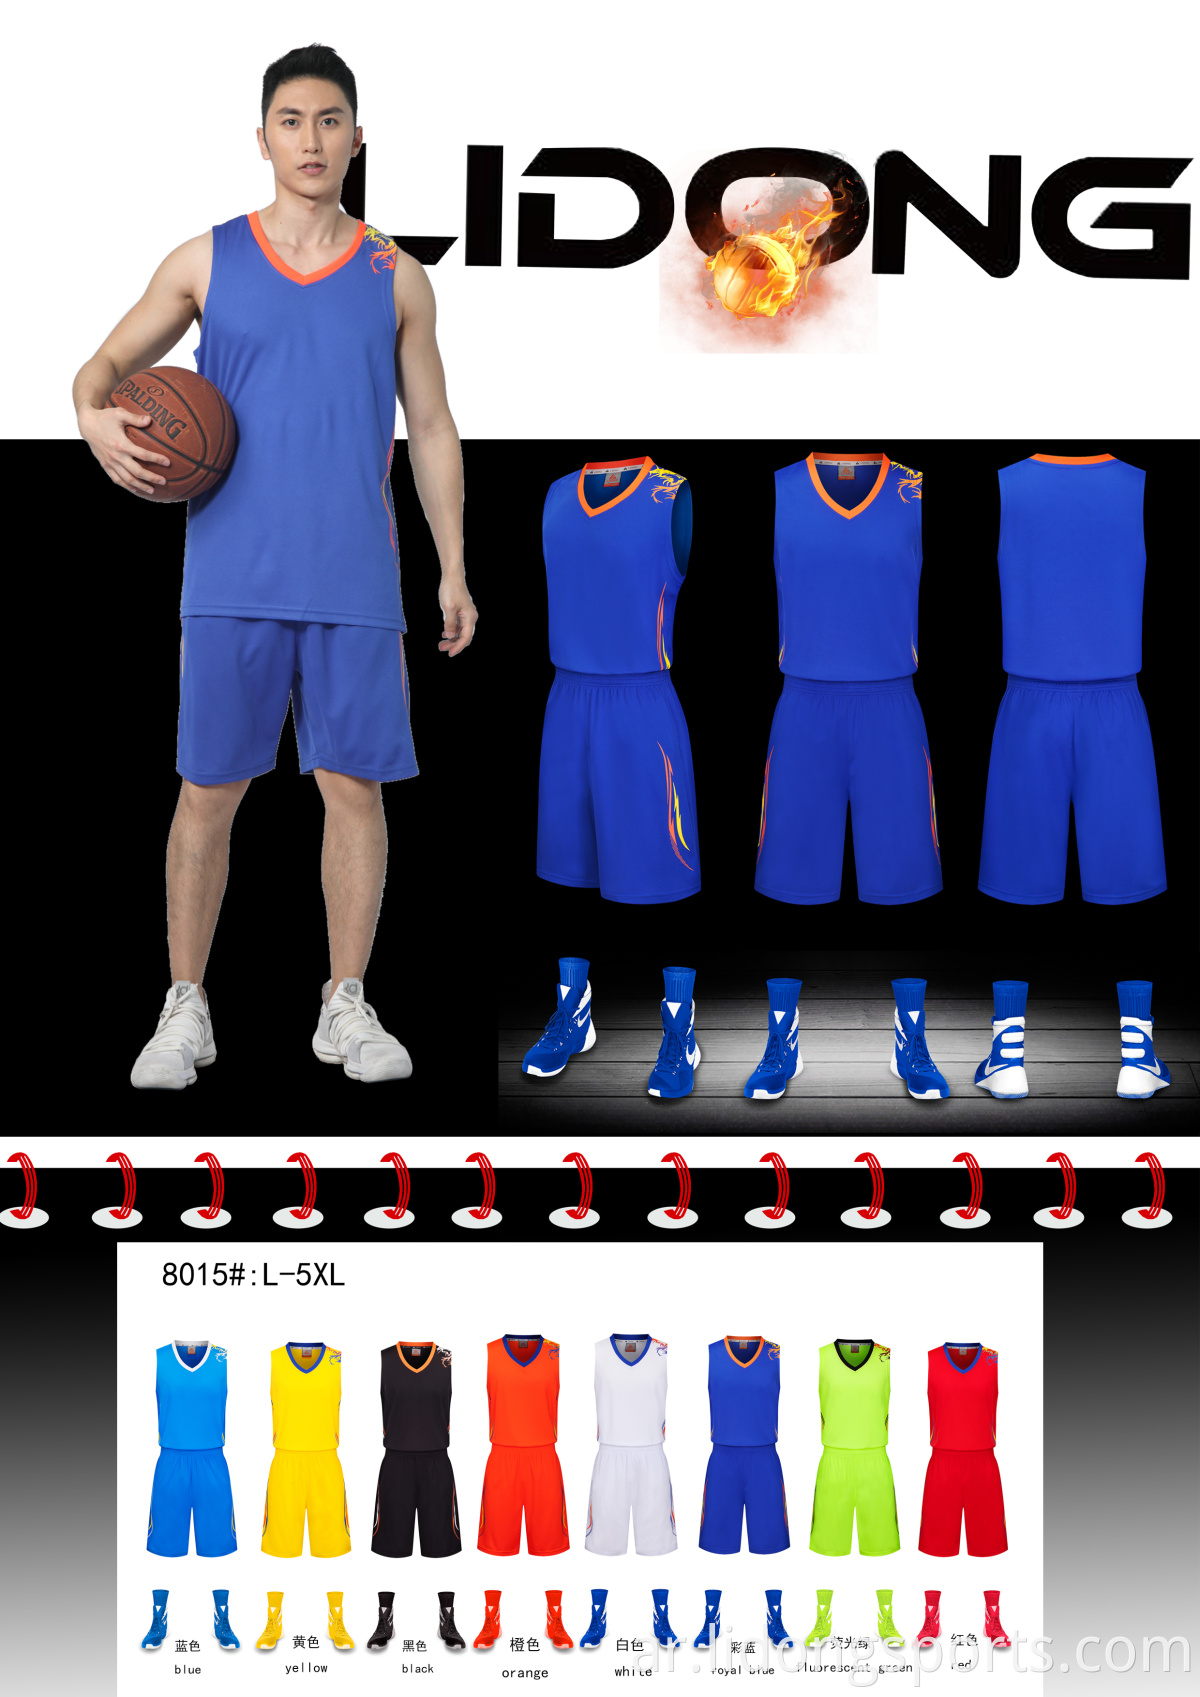 2021 Guangzhou أحدث رجال كرة السلة في جيرسي تصميم موحد للملابس الرياضية الحمراء ملابس كرة السلة مخصصة